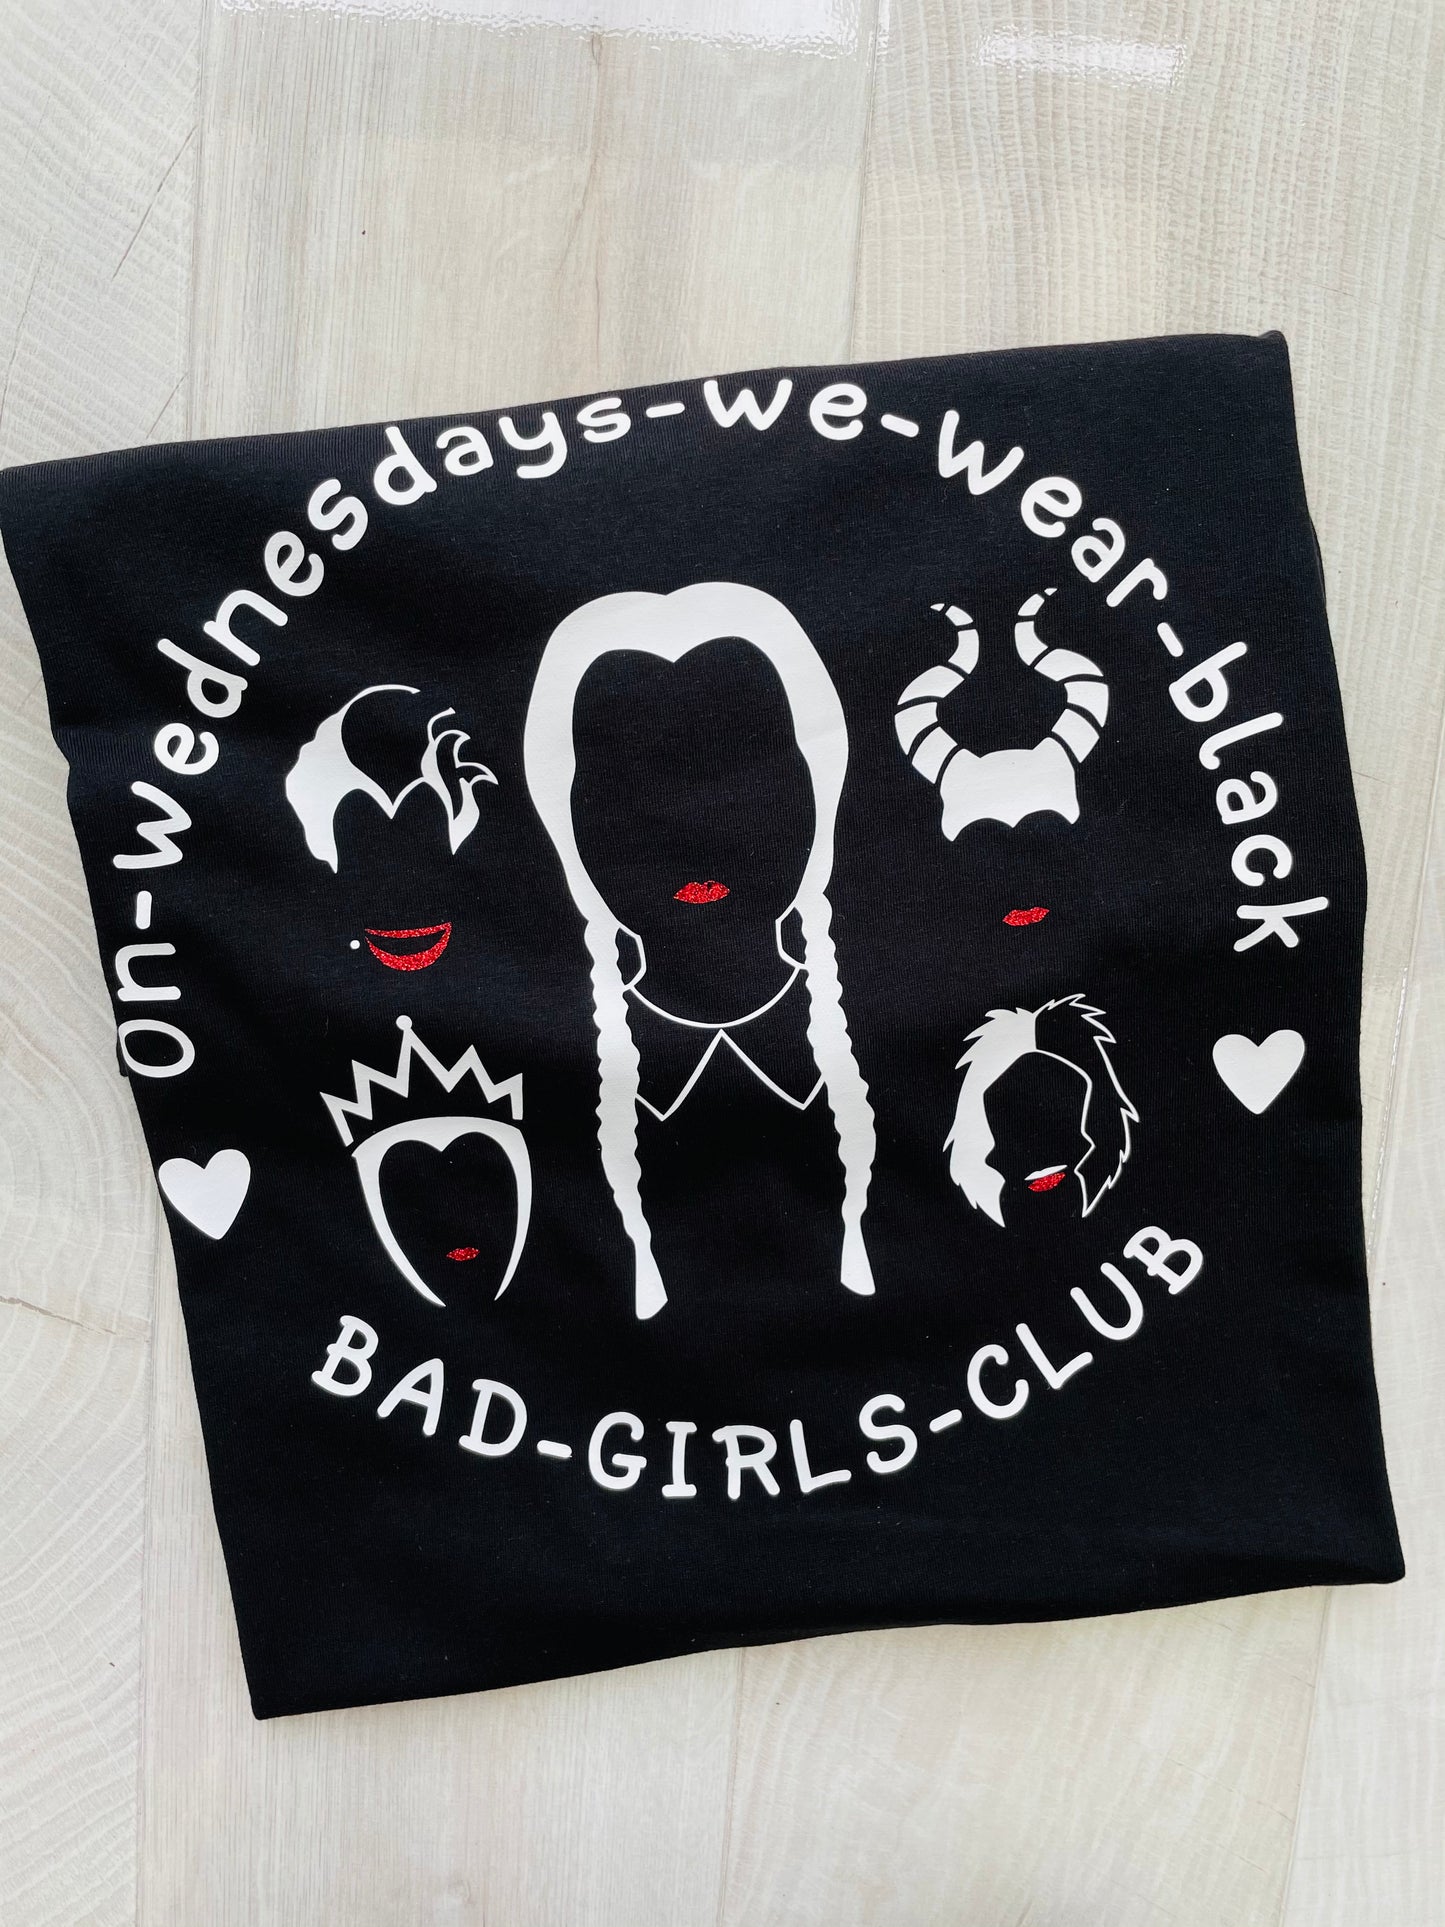 Bad Girls Club, On Wednesdays we wear black, villain T-shirt